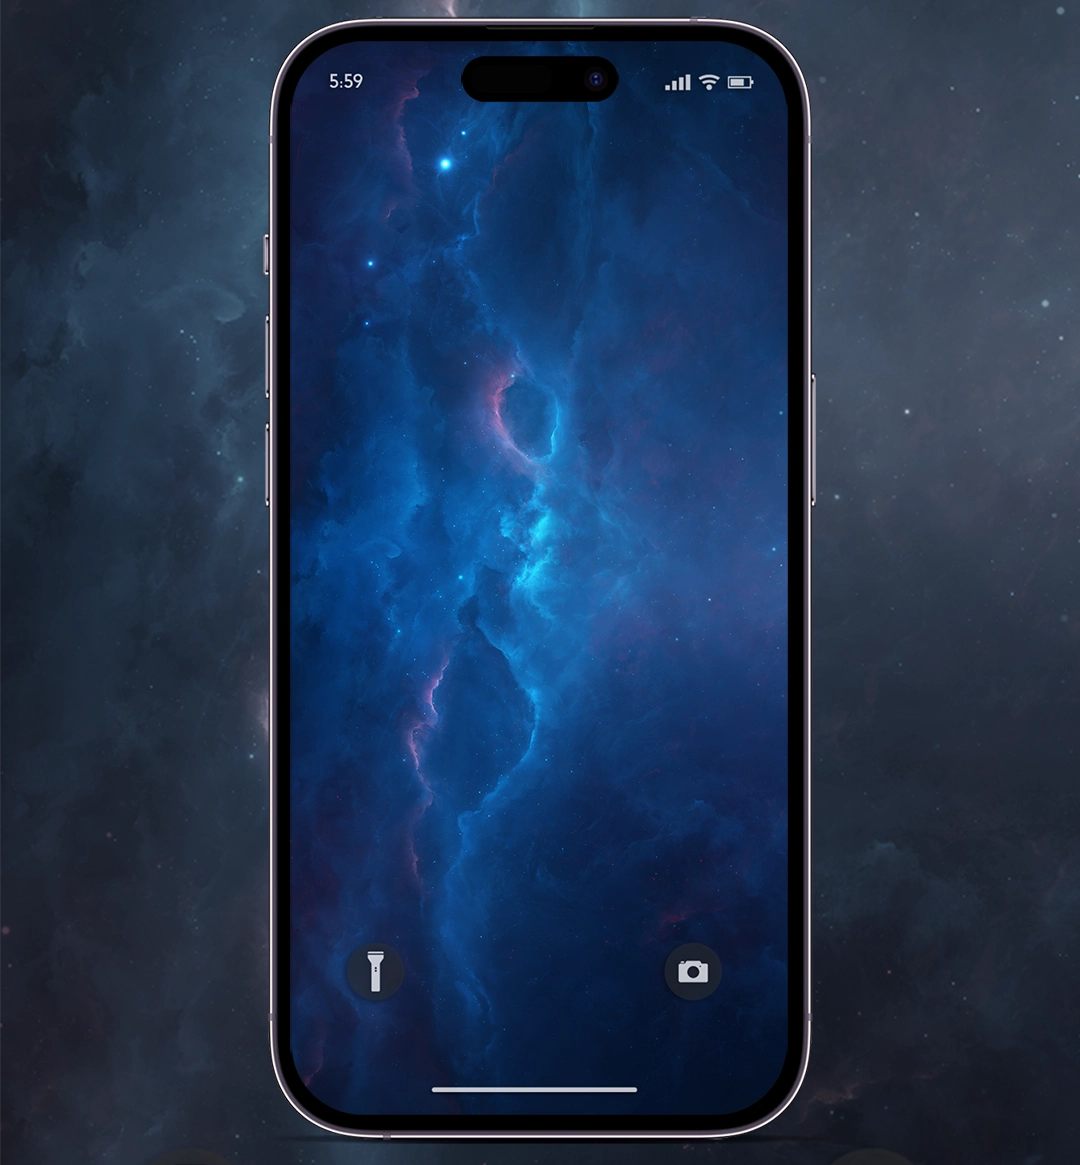 4K dark blue aesthetic wallpaper iPhone - Heroscreen 4K Background ...